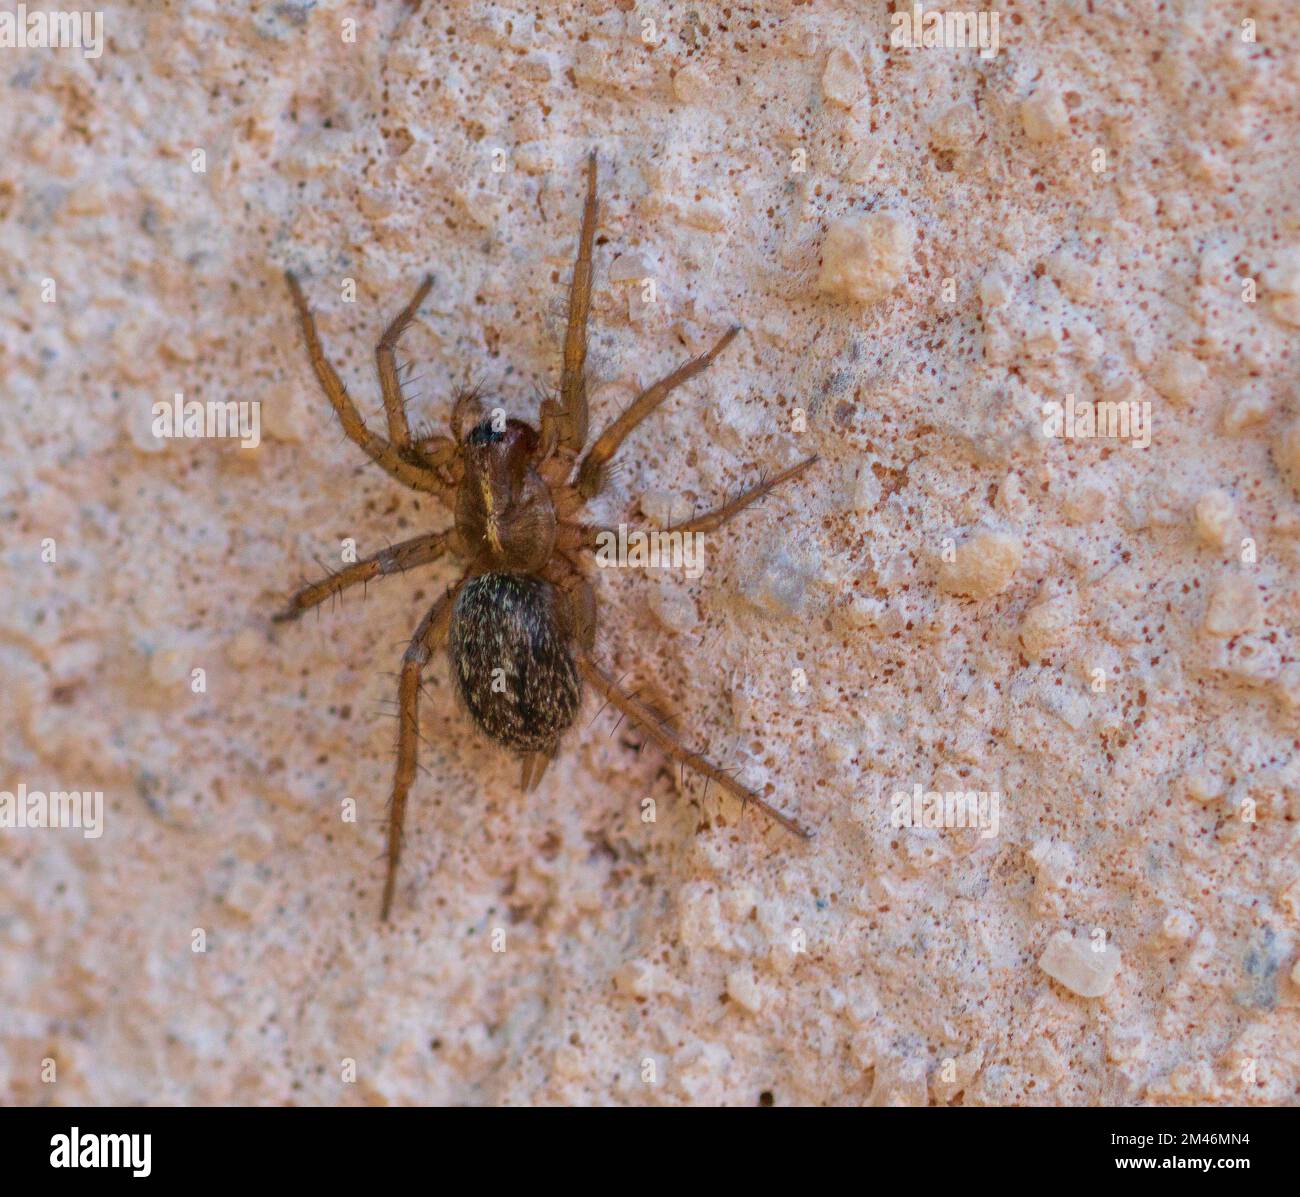 Lycosoides coarctata, Funnel Weaver Spider Stock Photo